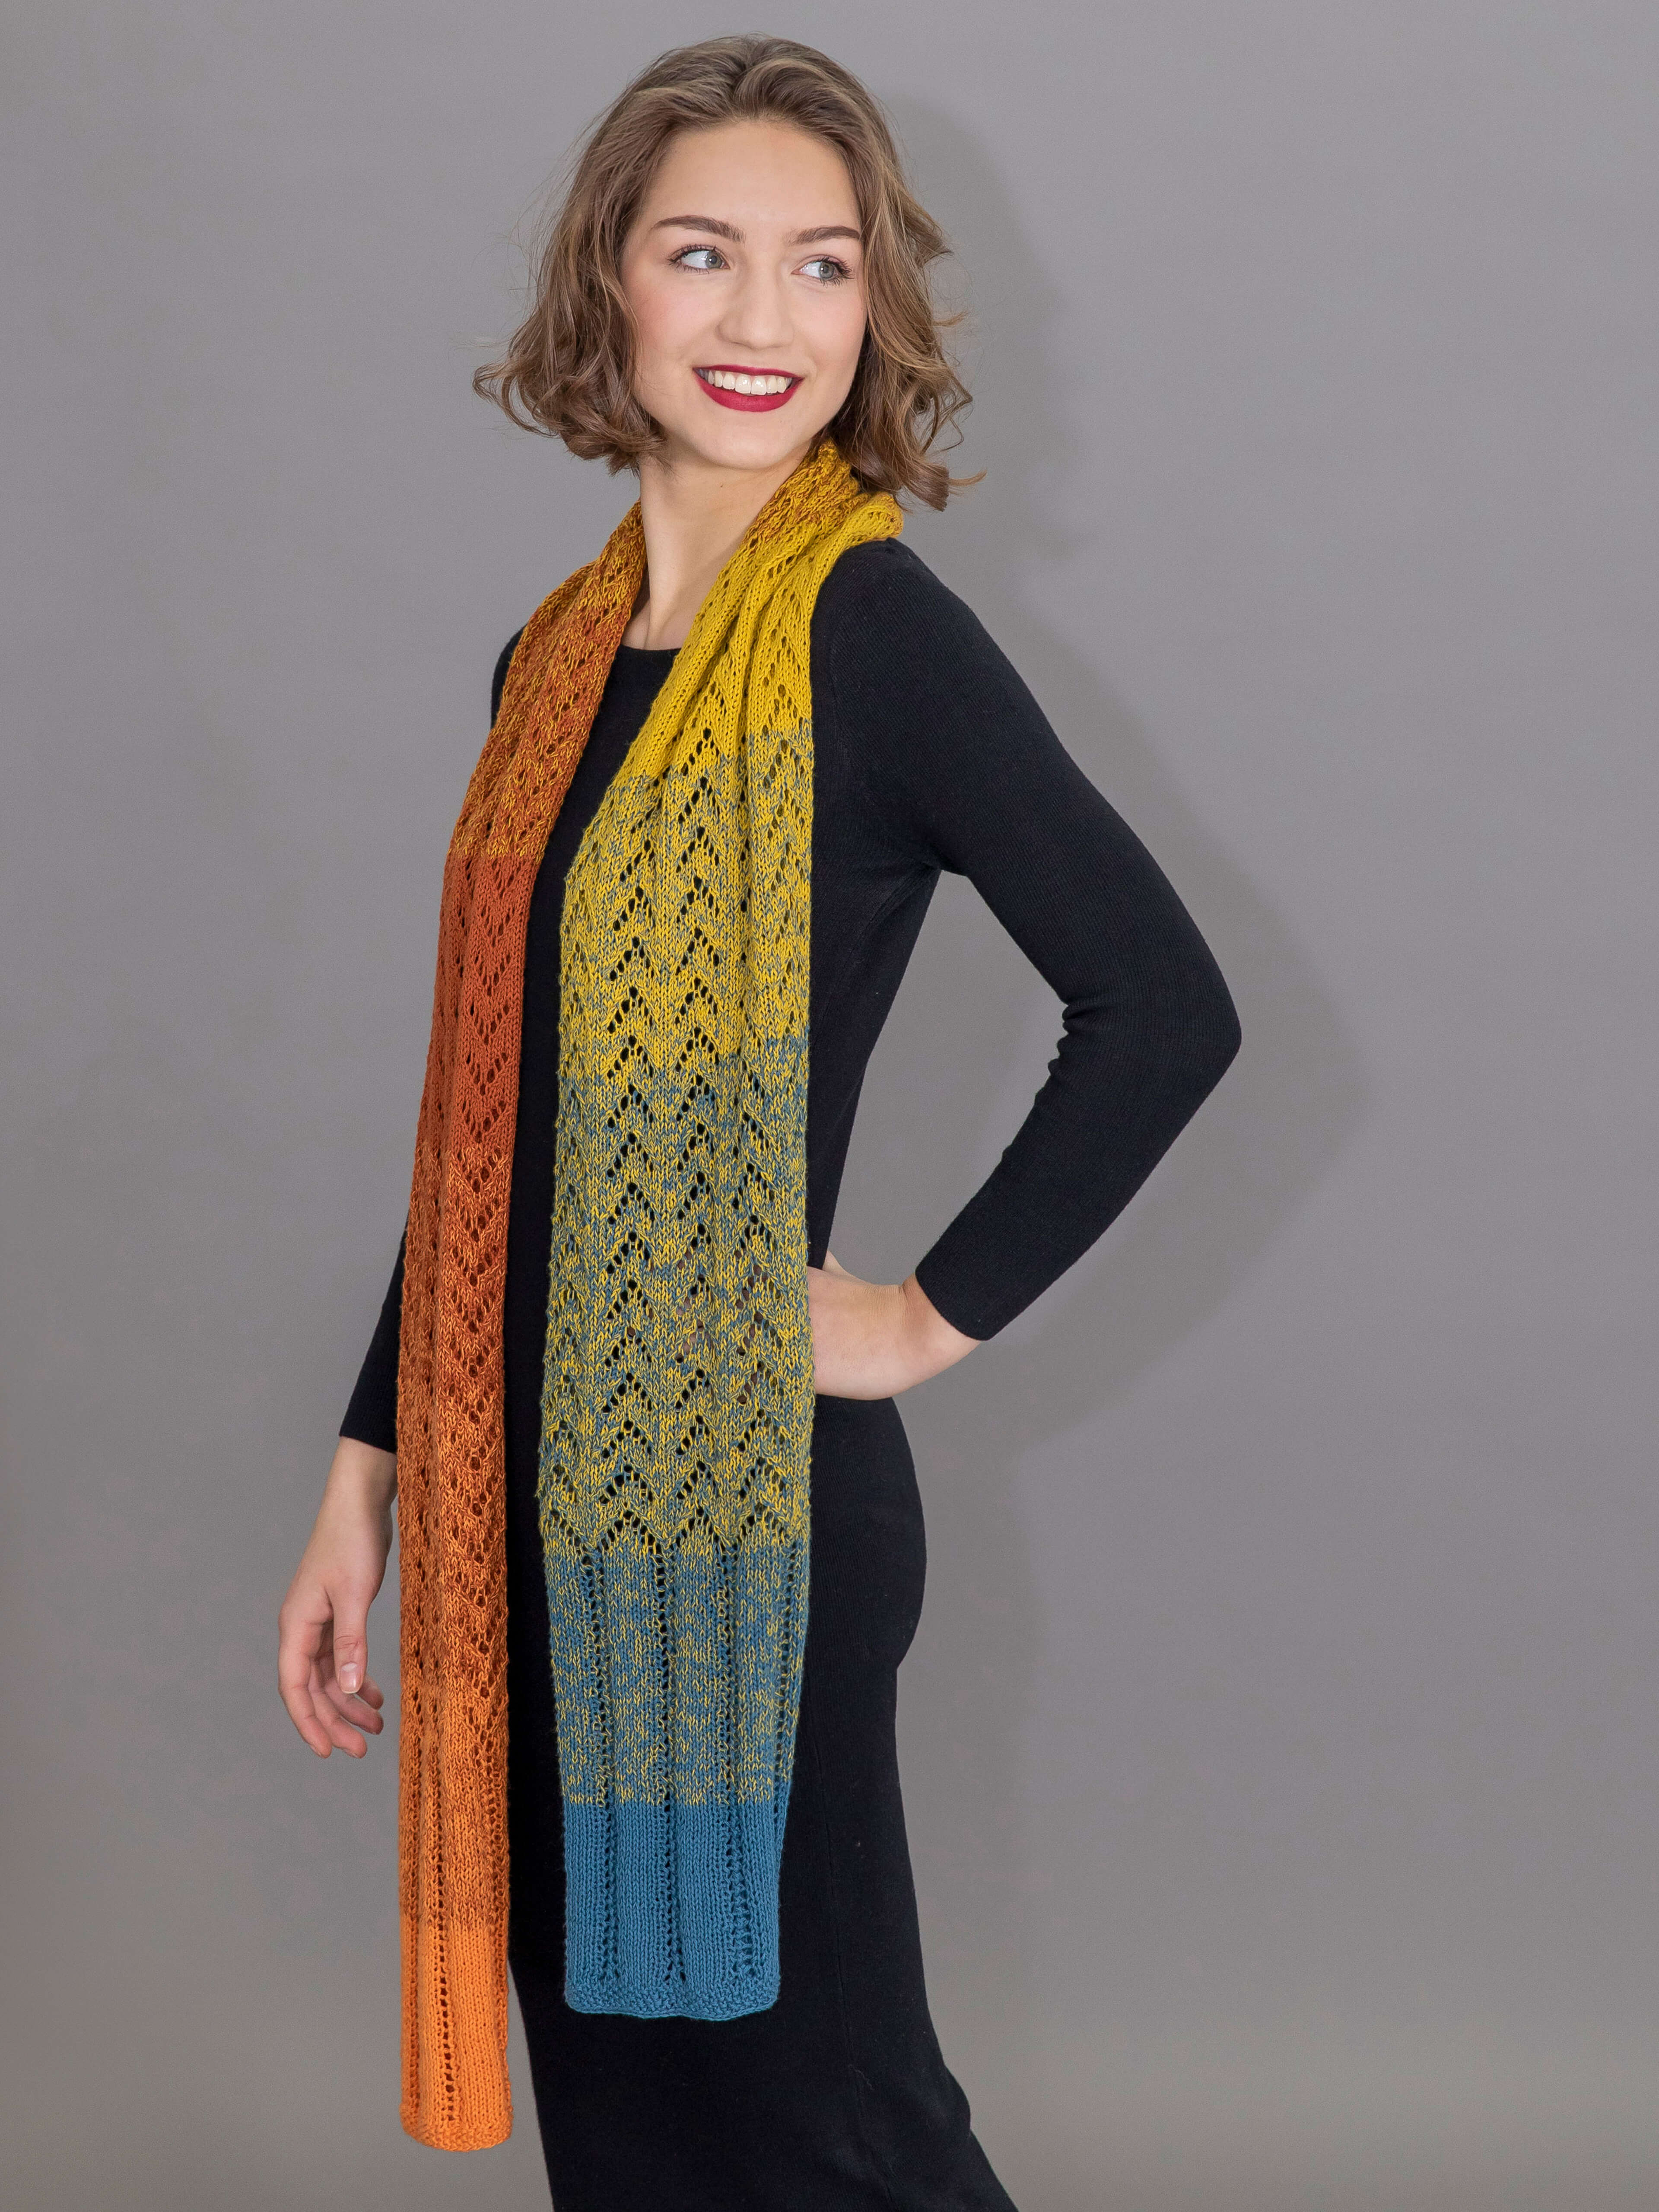 Frau mit orange-blau-gelbem Schal 